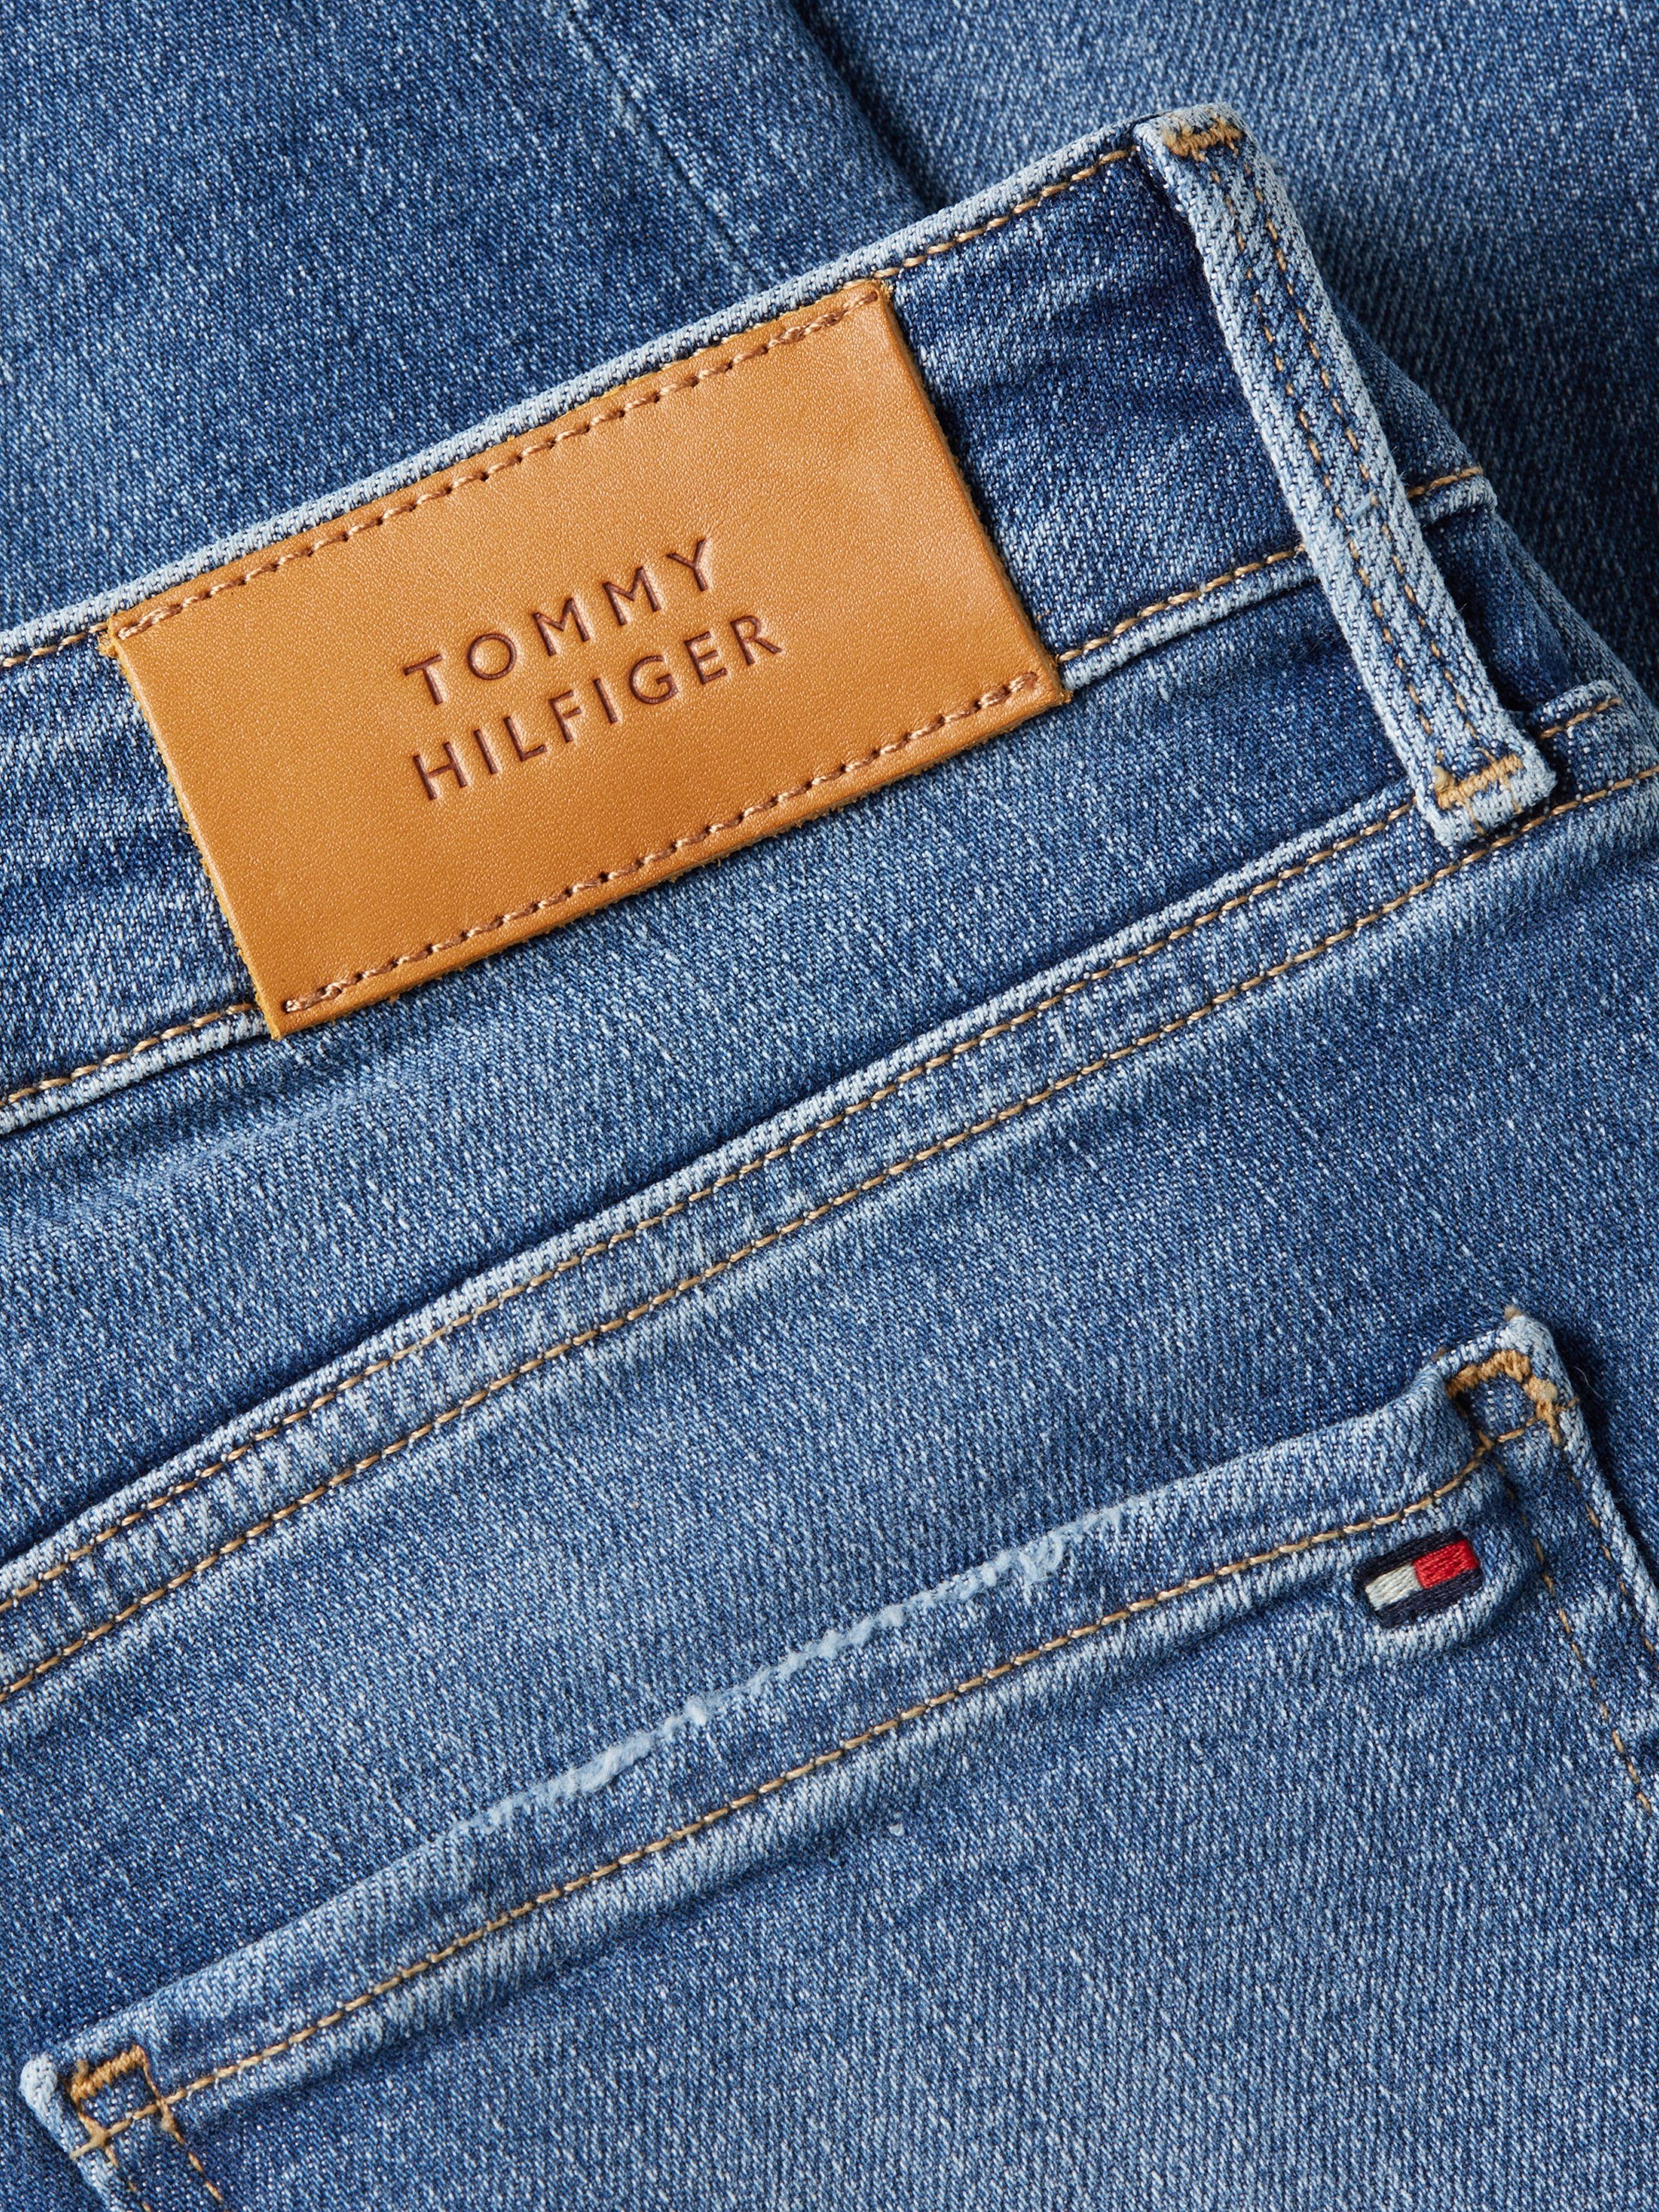 Hilfiger mit Leo HARLEM Skinny-fit-Jeans Tommy HW FLEX Hilfiger U SKINNY TH Logo-Badge Tommy